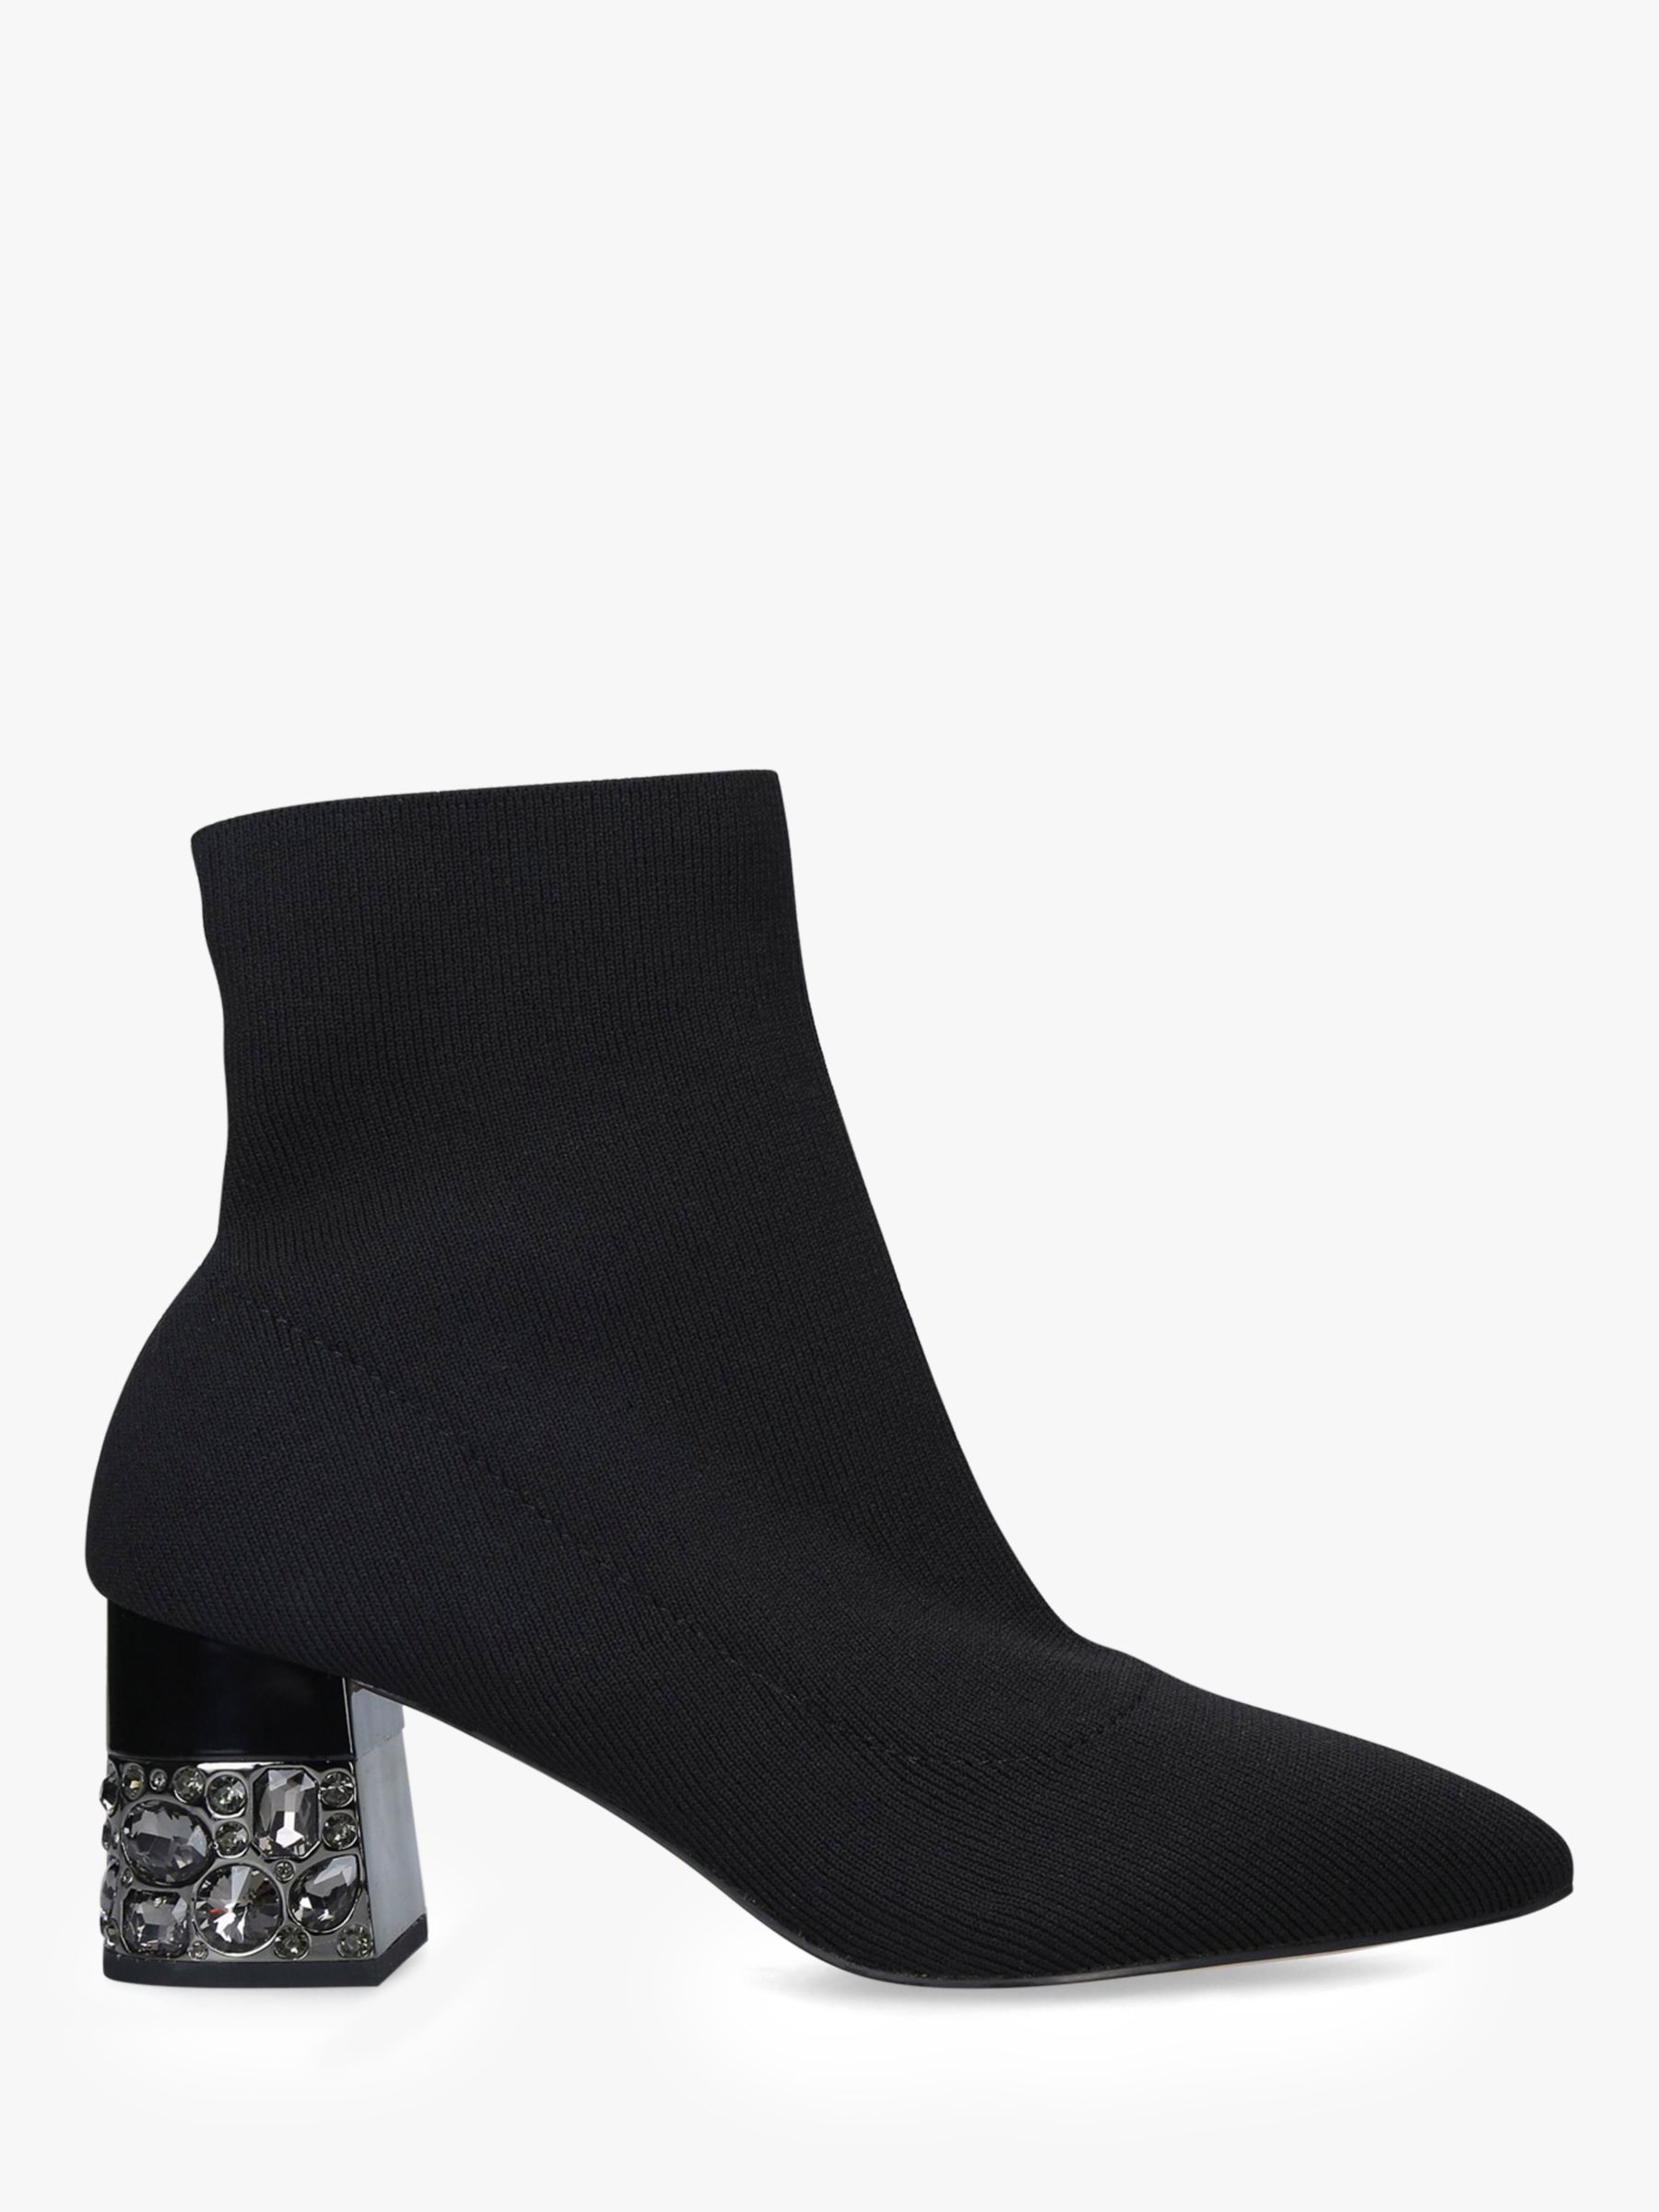 Carvela Kingpin Block Heel Sock Ankle Boots, Black